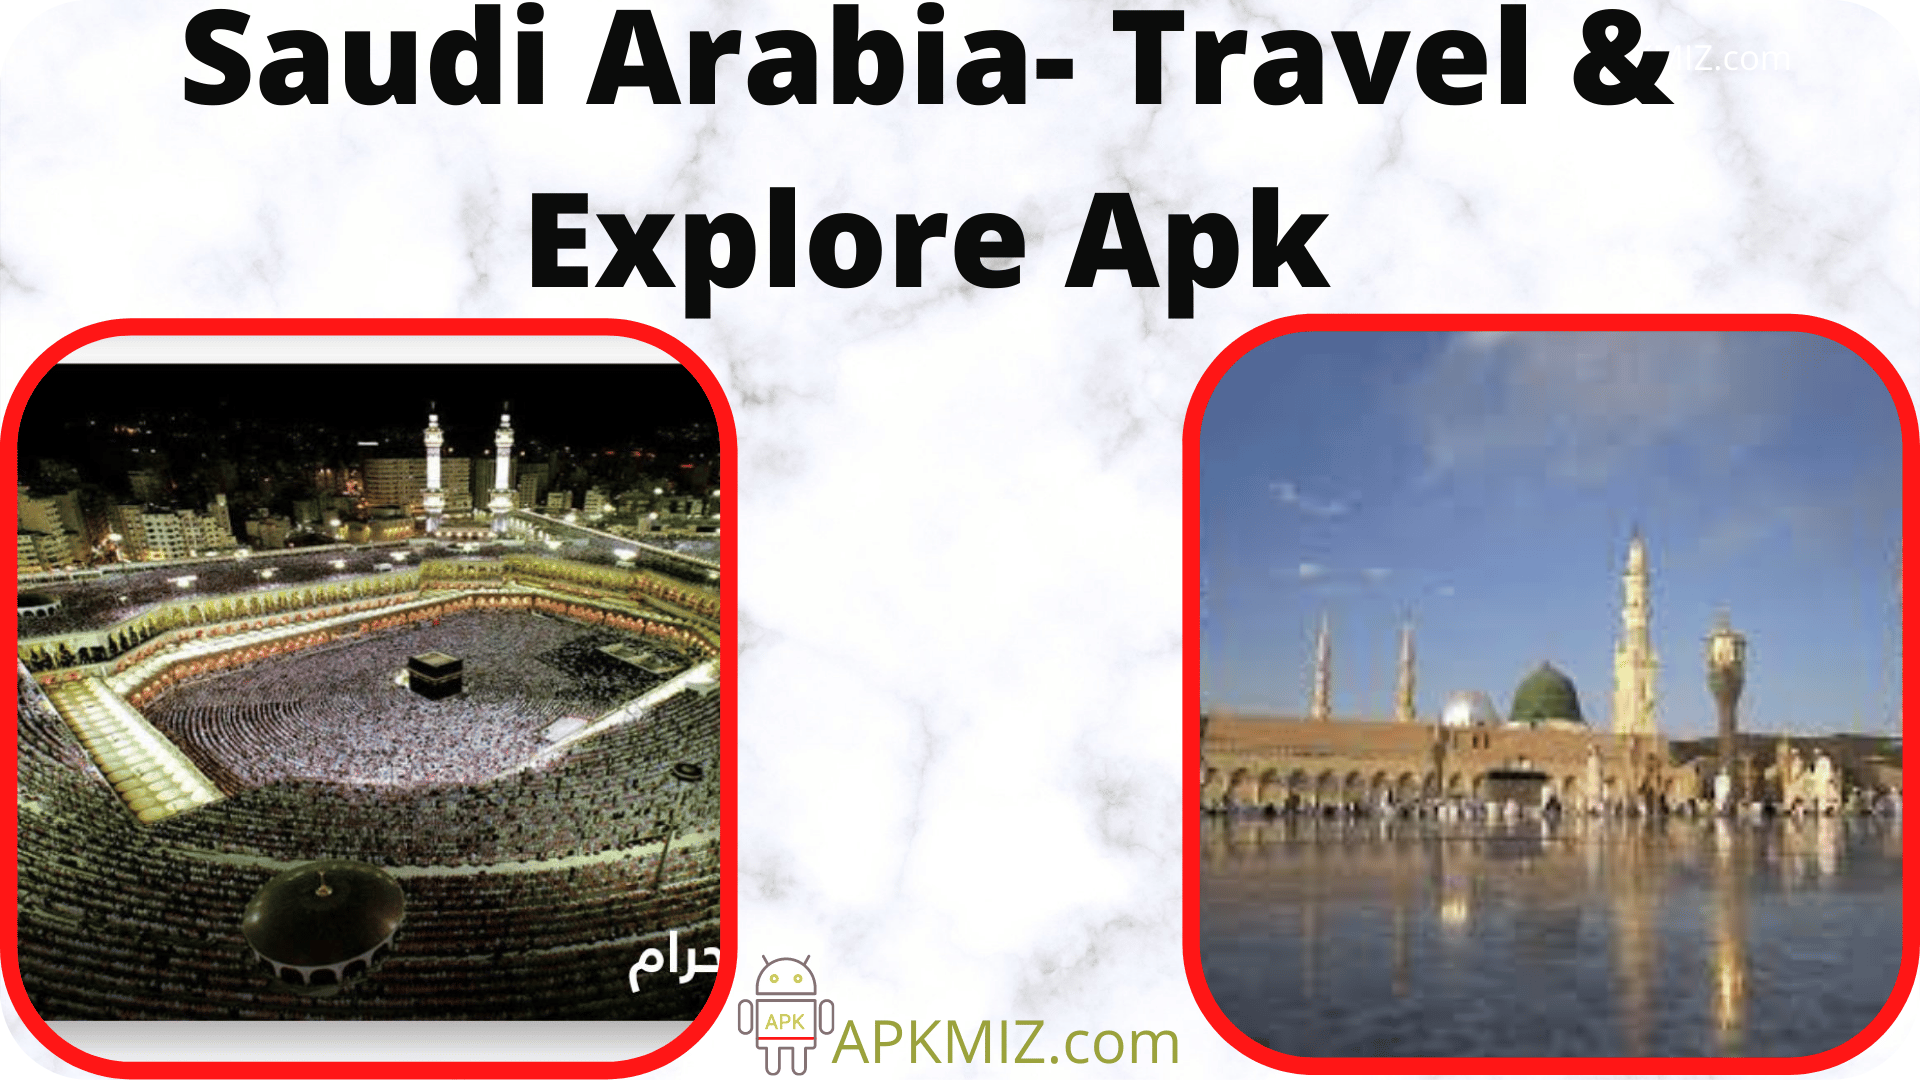 Saudi Arabia- Travel & Explore Apk